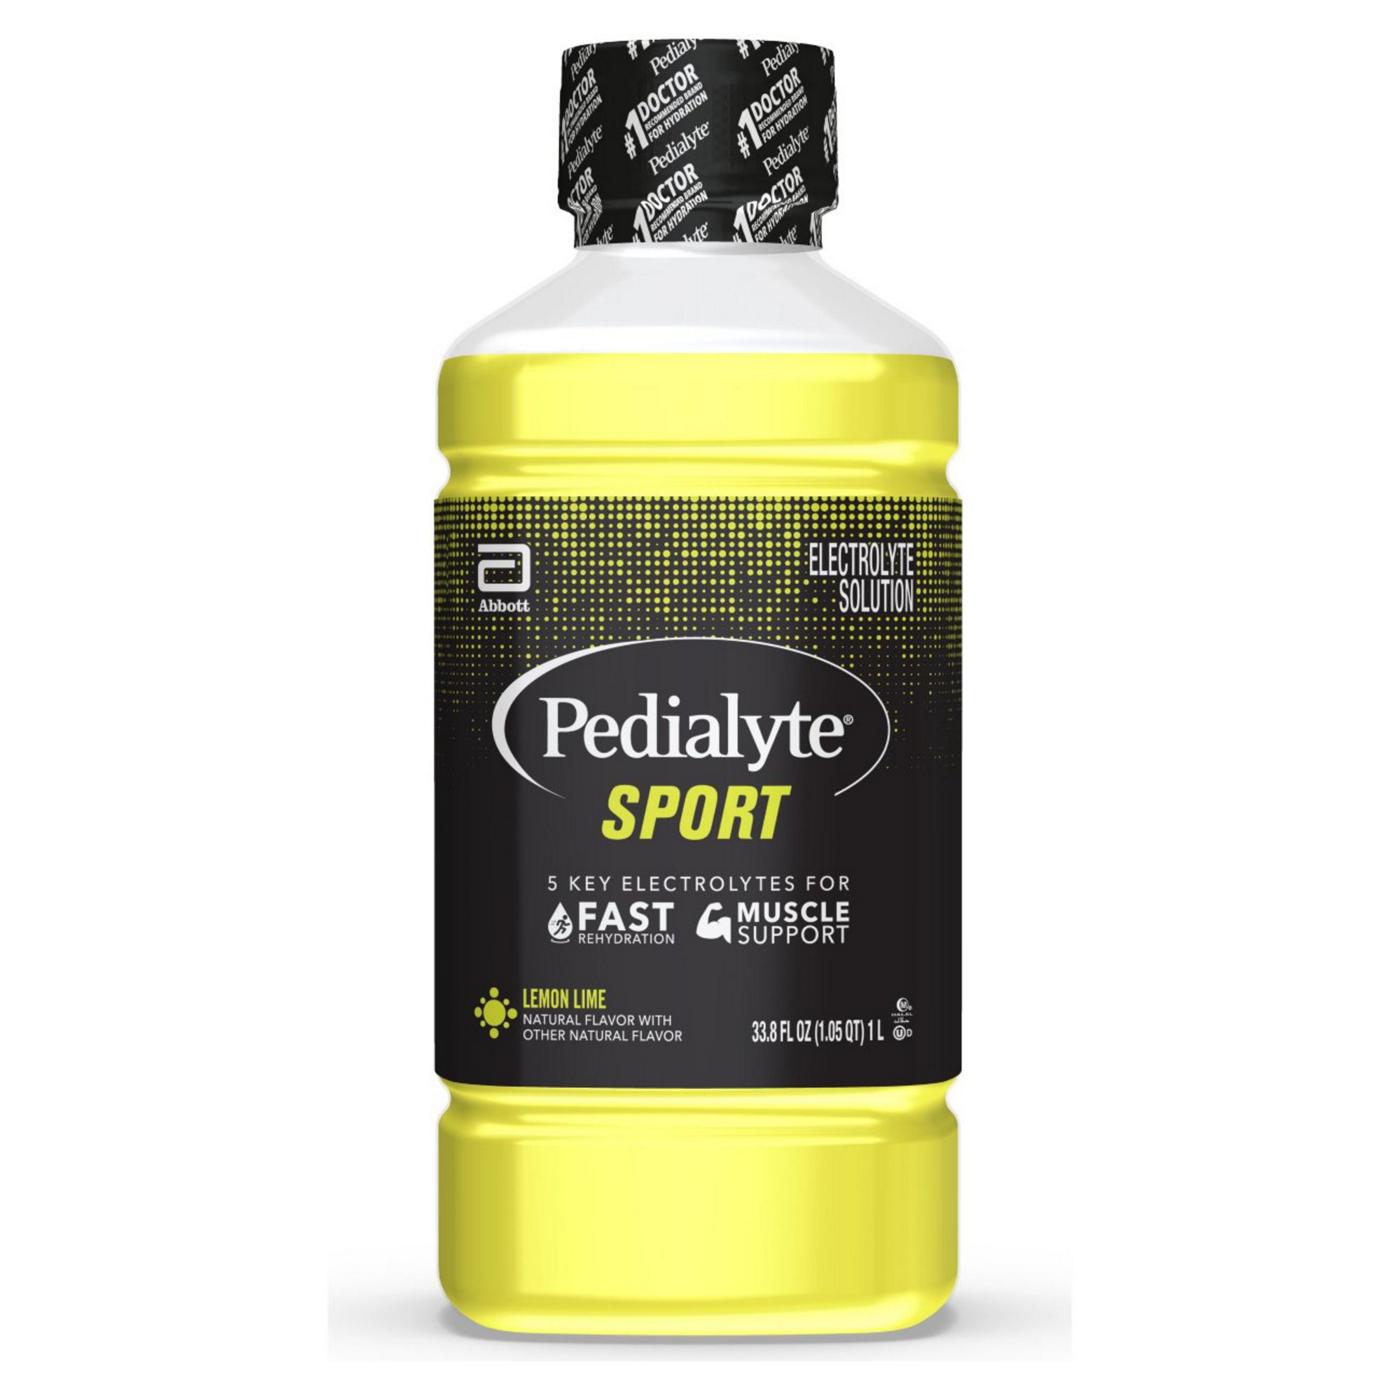 Pedialyte Sport Electrolyte Solution - Lemon Lime; image 1 of 9